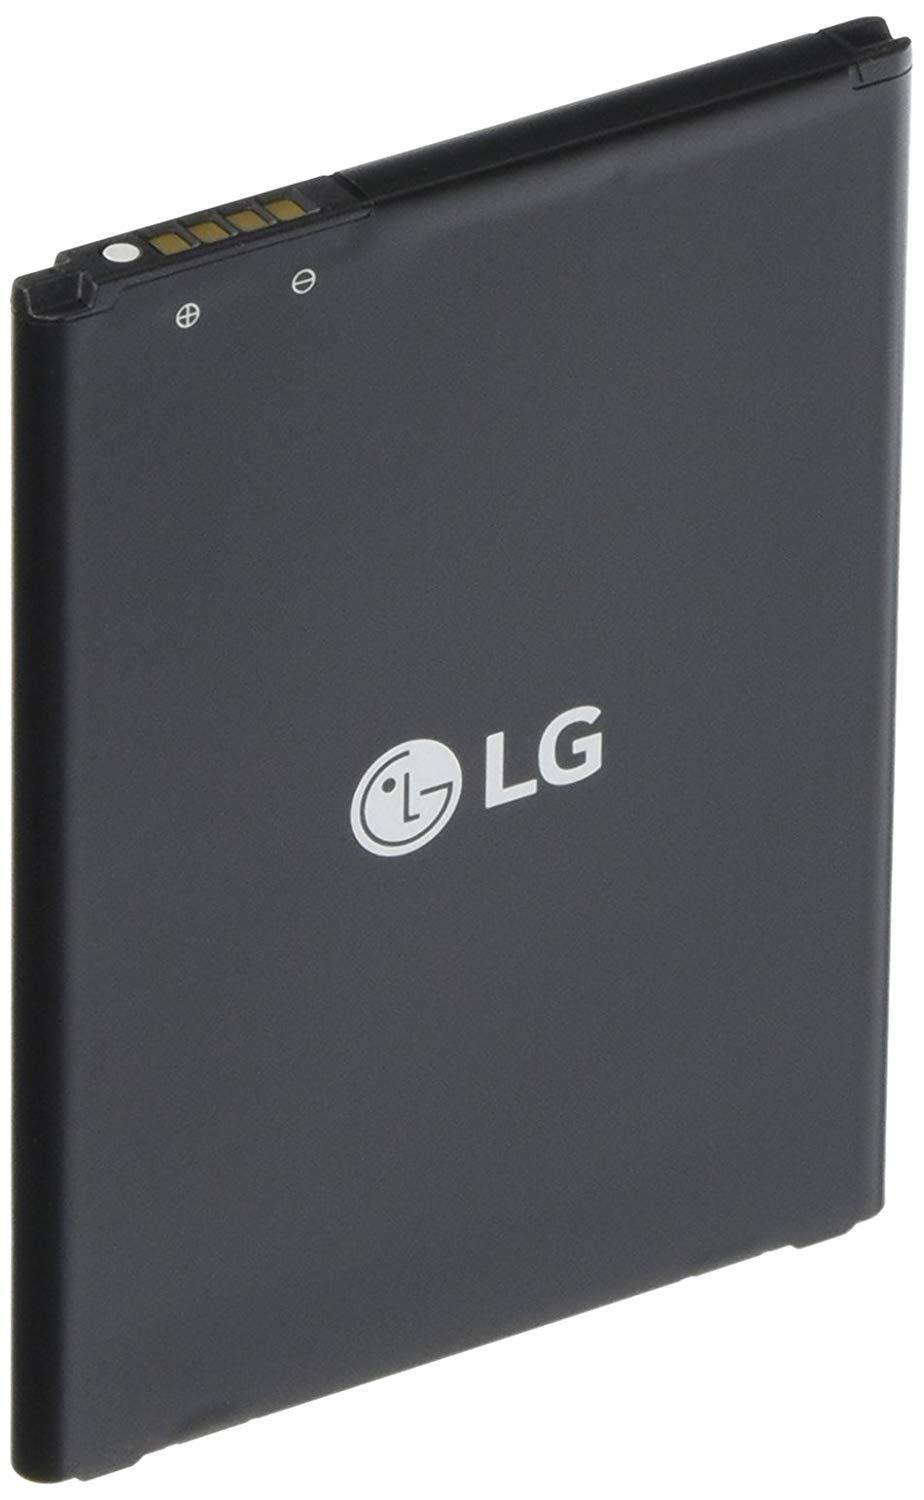 3 PACK Genuine OEM Original LG Spare Extra Regular Standard Li-Ion Battery 3200mAh BL-46G1F / BAK-1100 For LG V10 Phone (3x LG Battery) - New - image 1 of 1